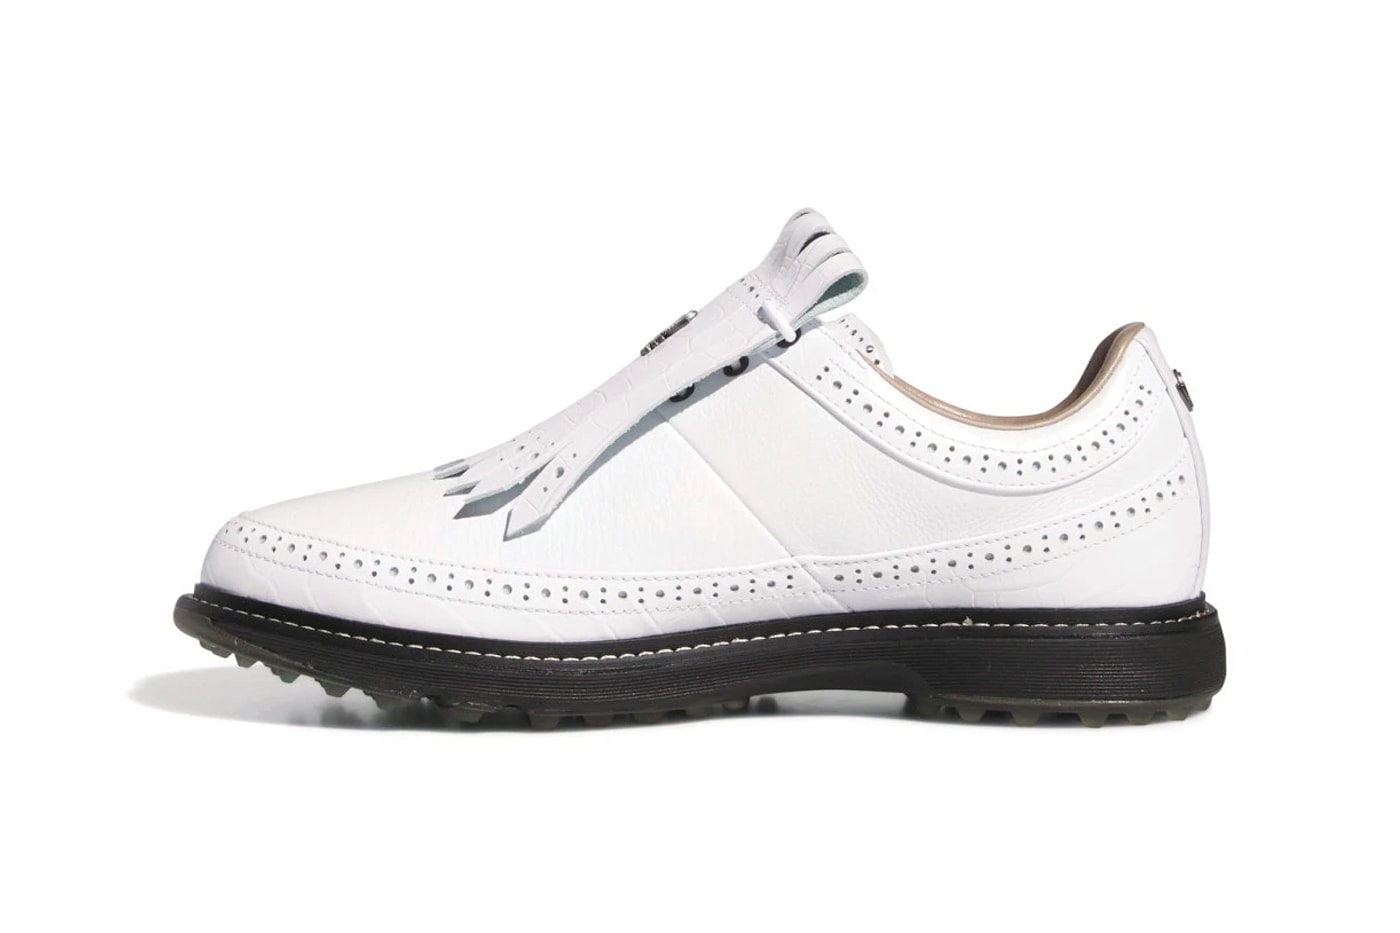 Macklemore Bogey Boys adidas mc80 golf shoe june 14 boost torsion brogue release info date price